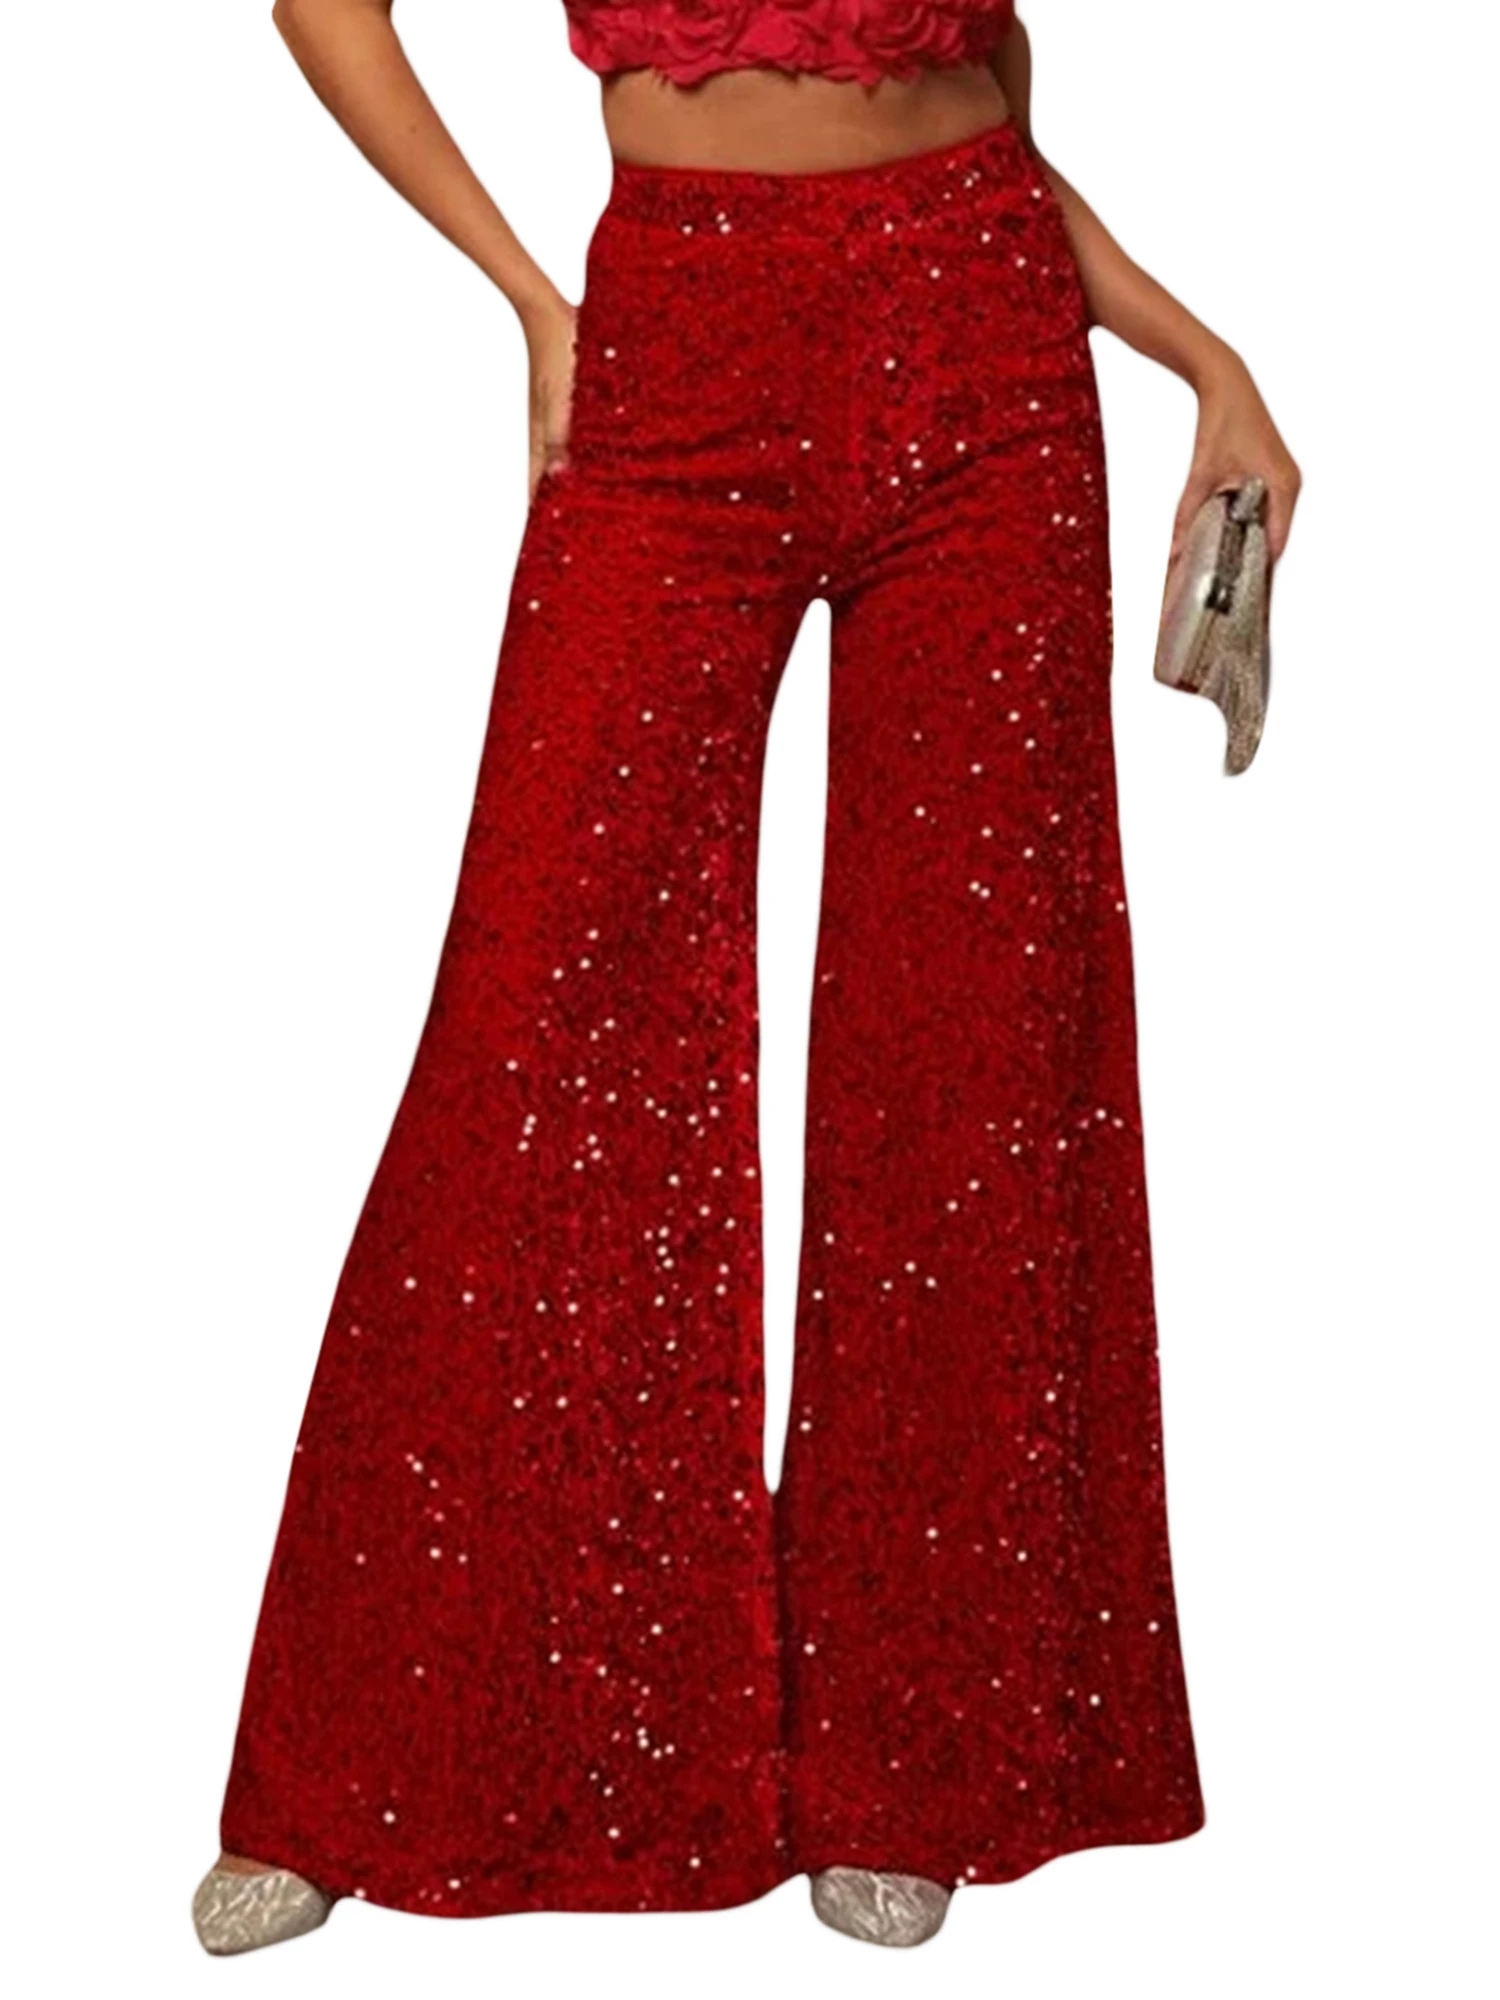 

JBEELATE Women s Sequin Wide Leg Pants Sparkle Elastic High Waist Glitter Flare Bell Bottom Trousers Party Clubwear Red